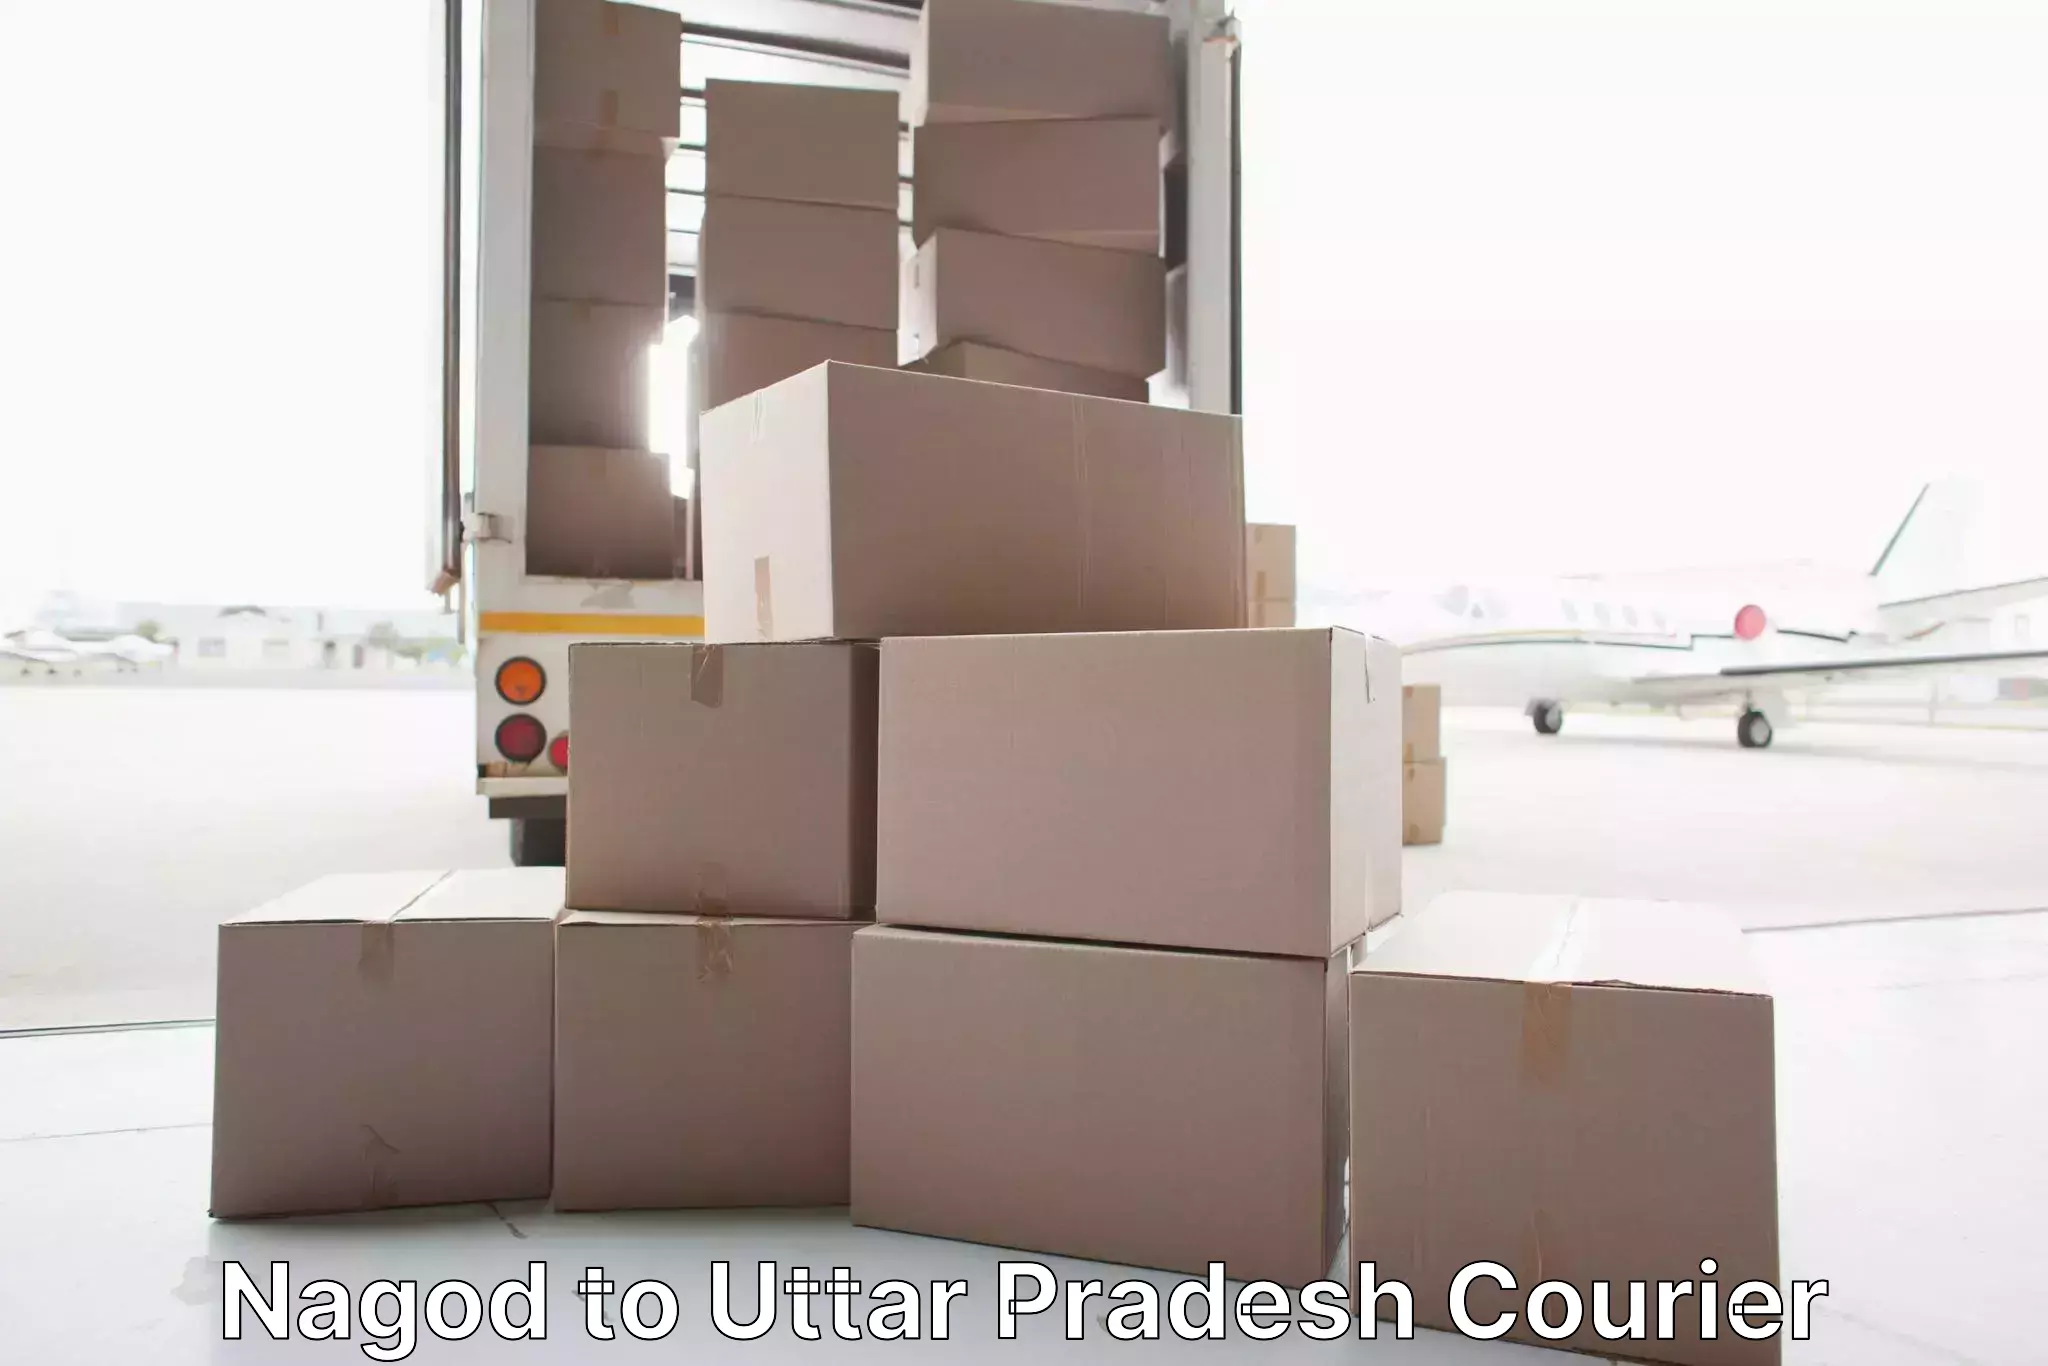 Professional moving company Nagod to Uttar Pradesh